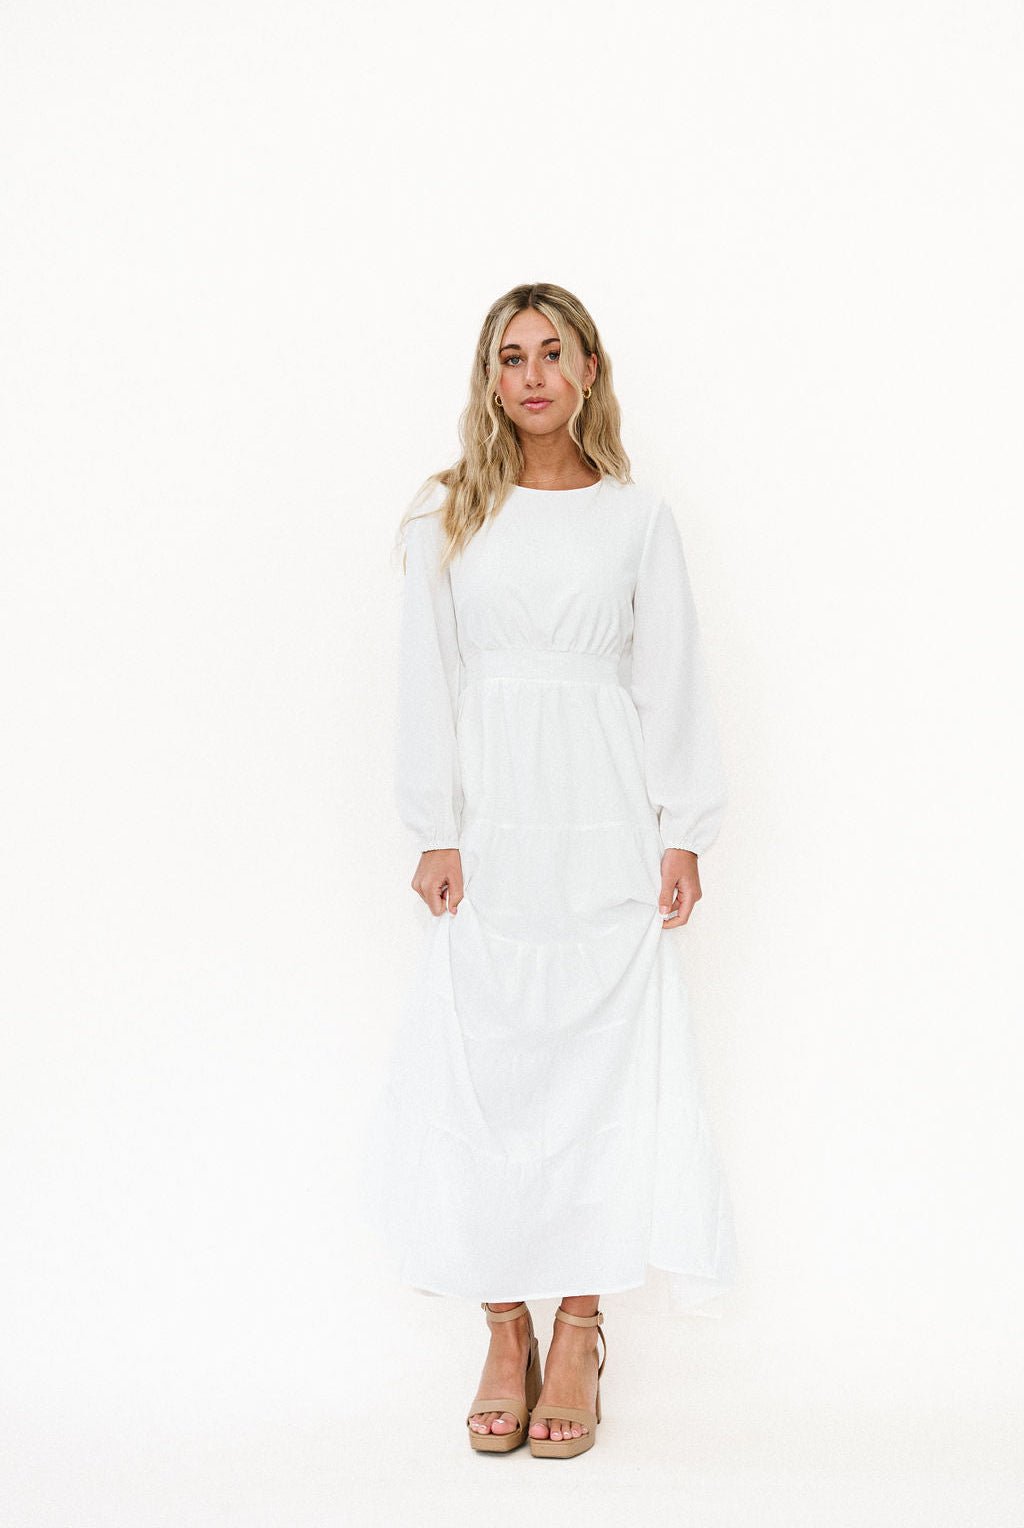 White LDS Temple Dress